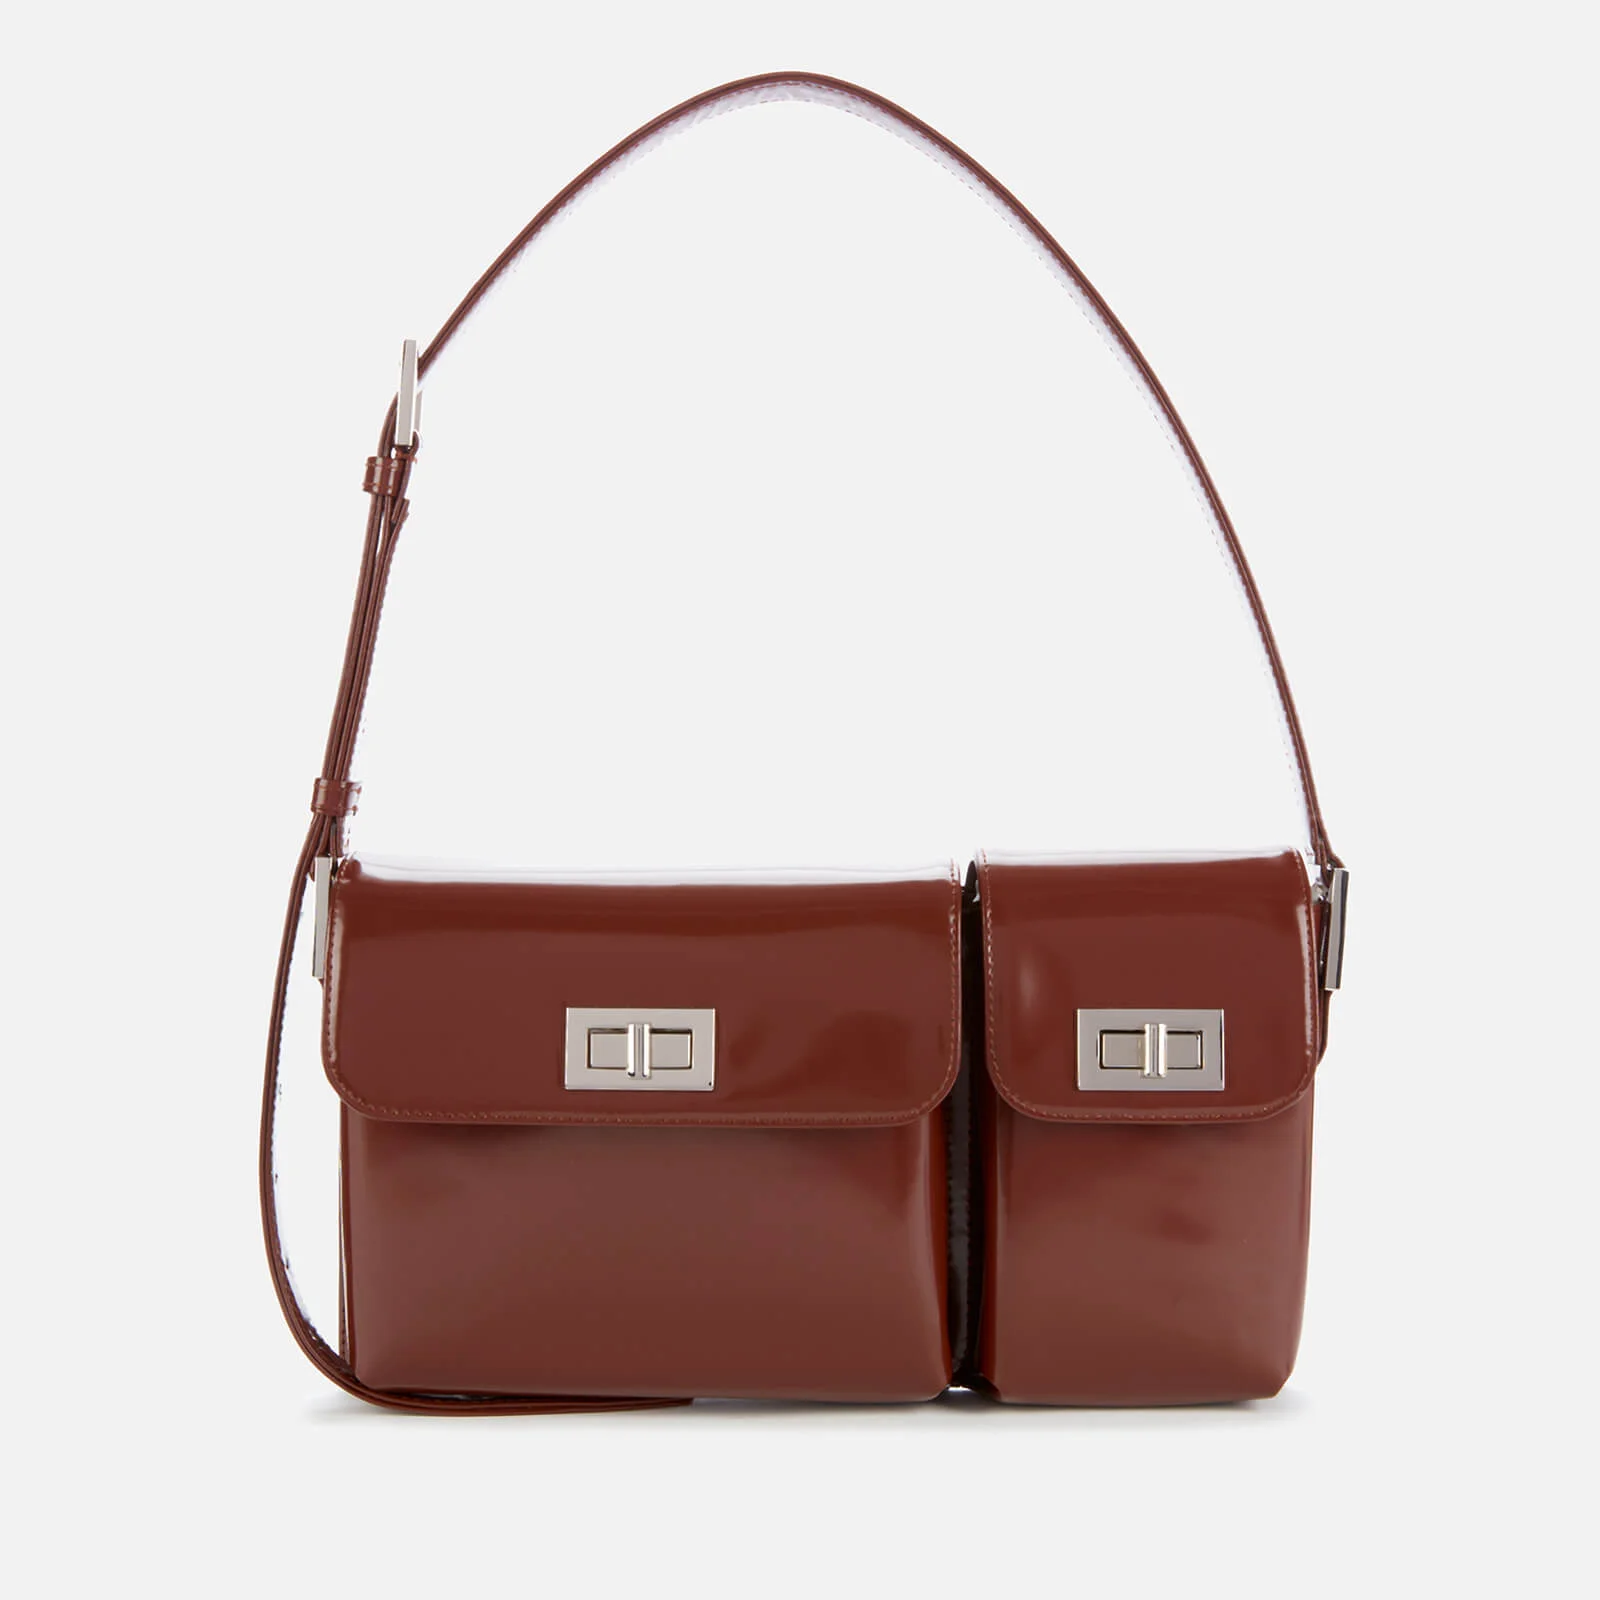 BY FAR Women's Billy Semi Patent Shoulder Bag - Dark Brown Image 1